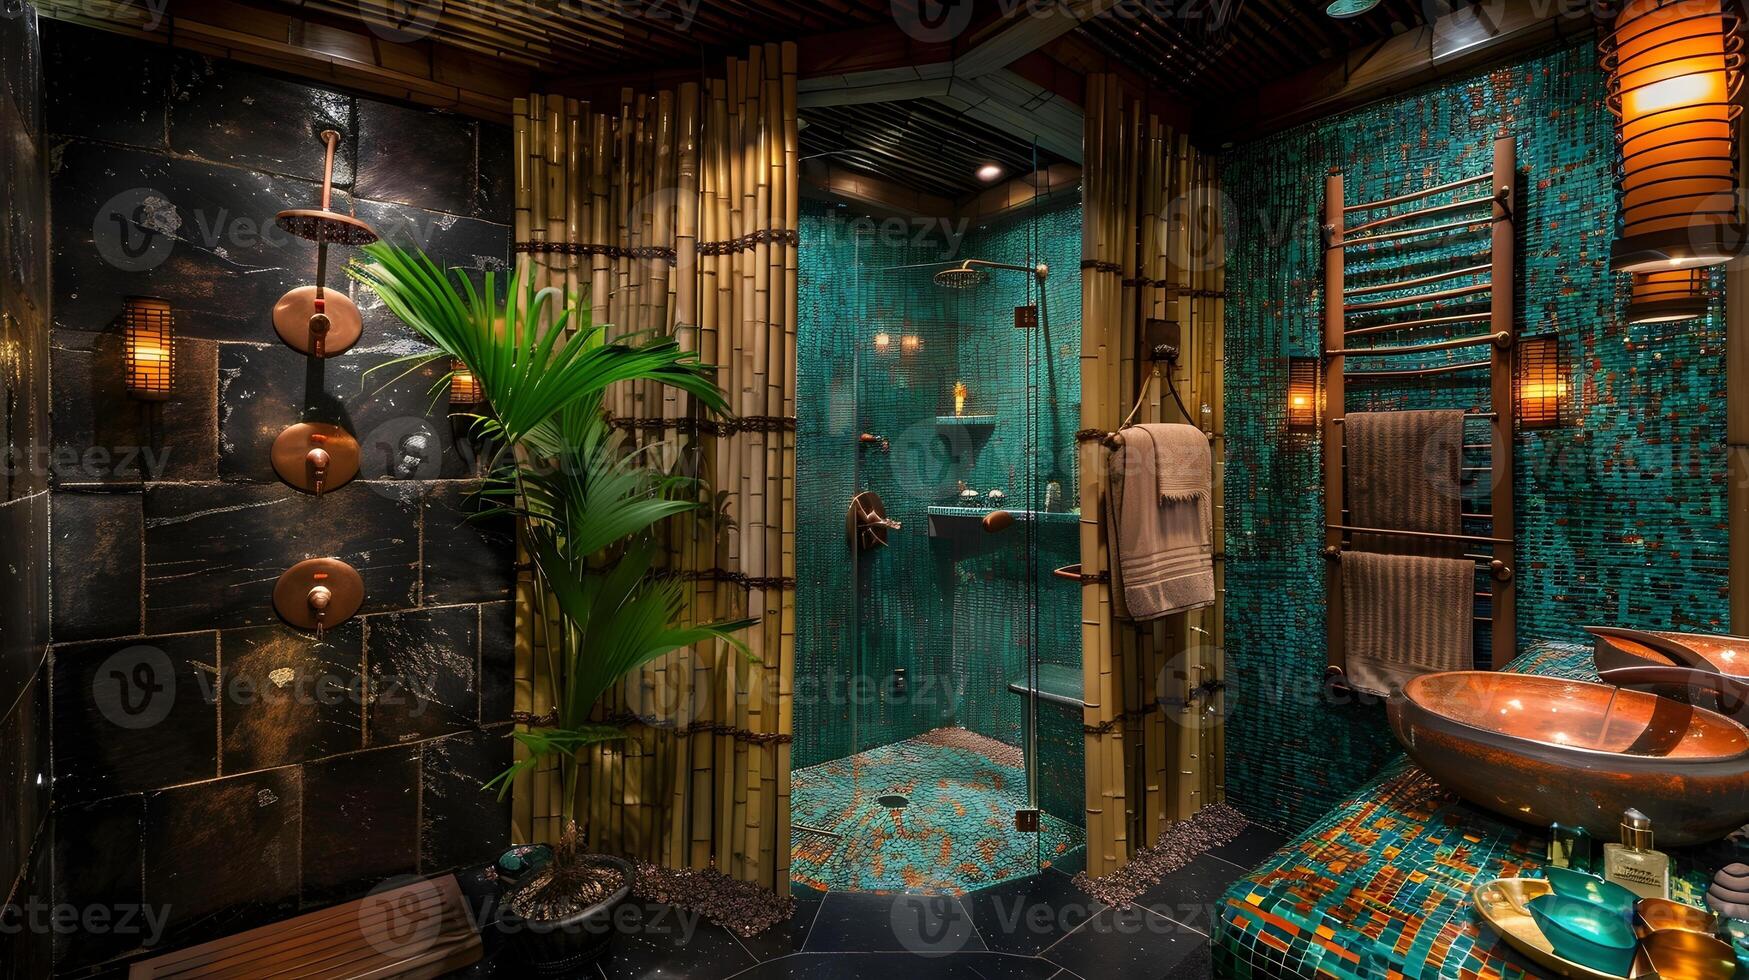 omgivande upplyst luxe badrum med medelhavsstil mosaik- kaklade dusch och modern koppar fixturer foto